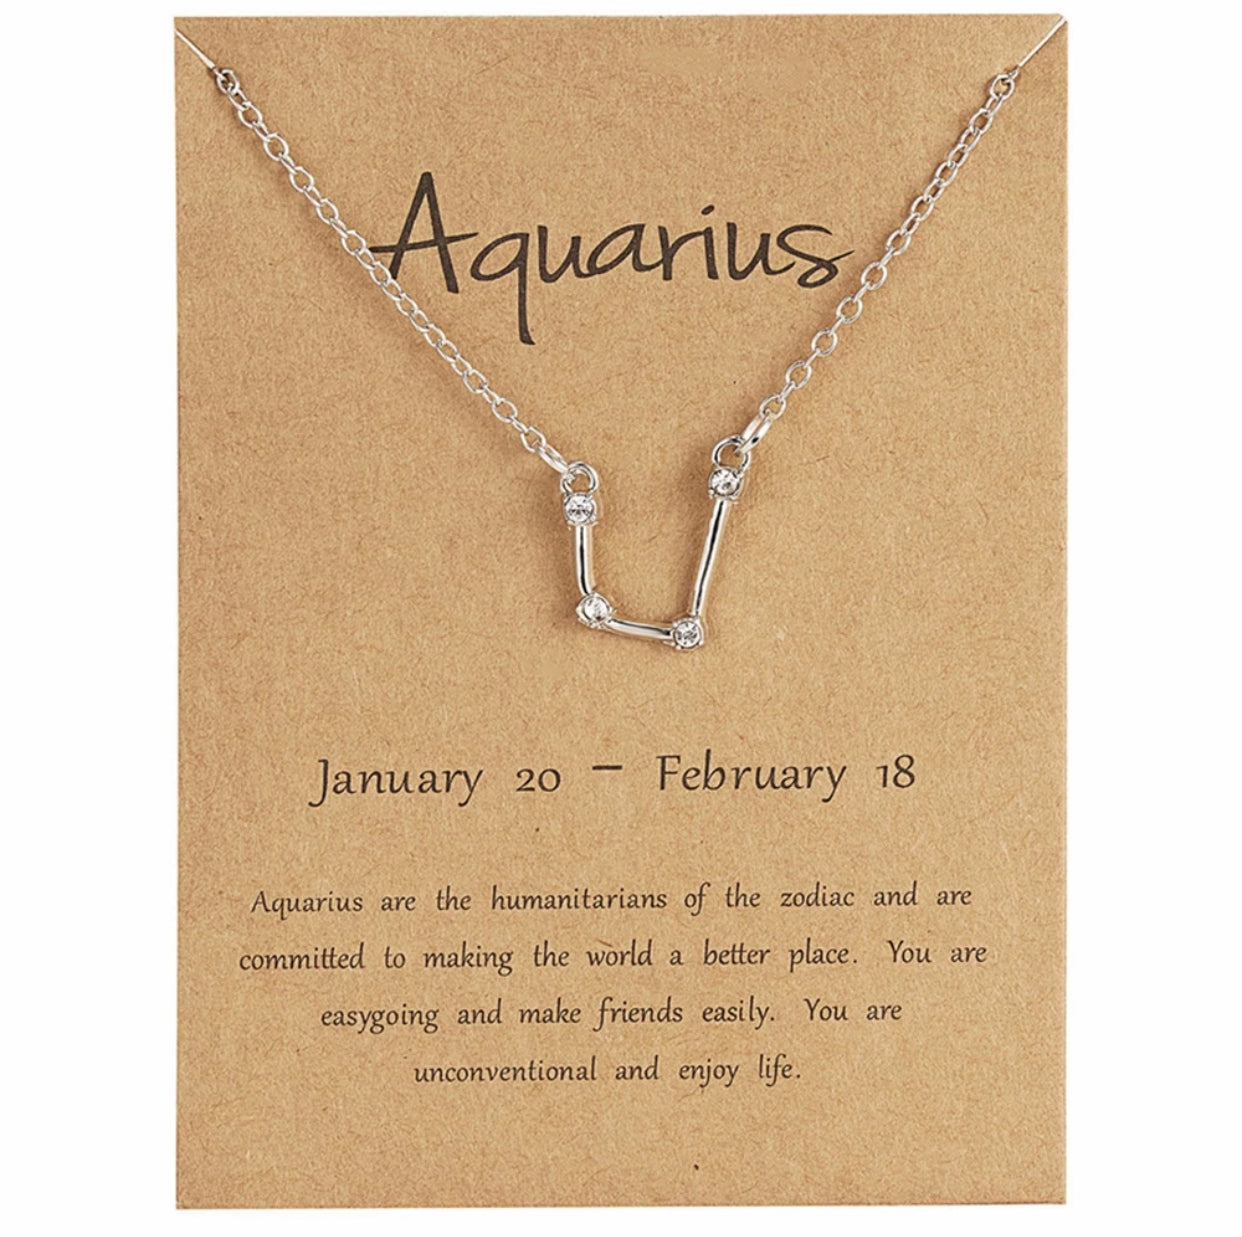 Aquarius Necklace (January 20 - February 18)